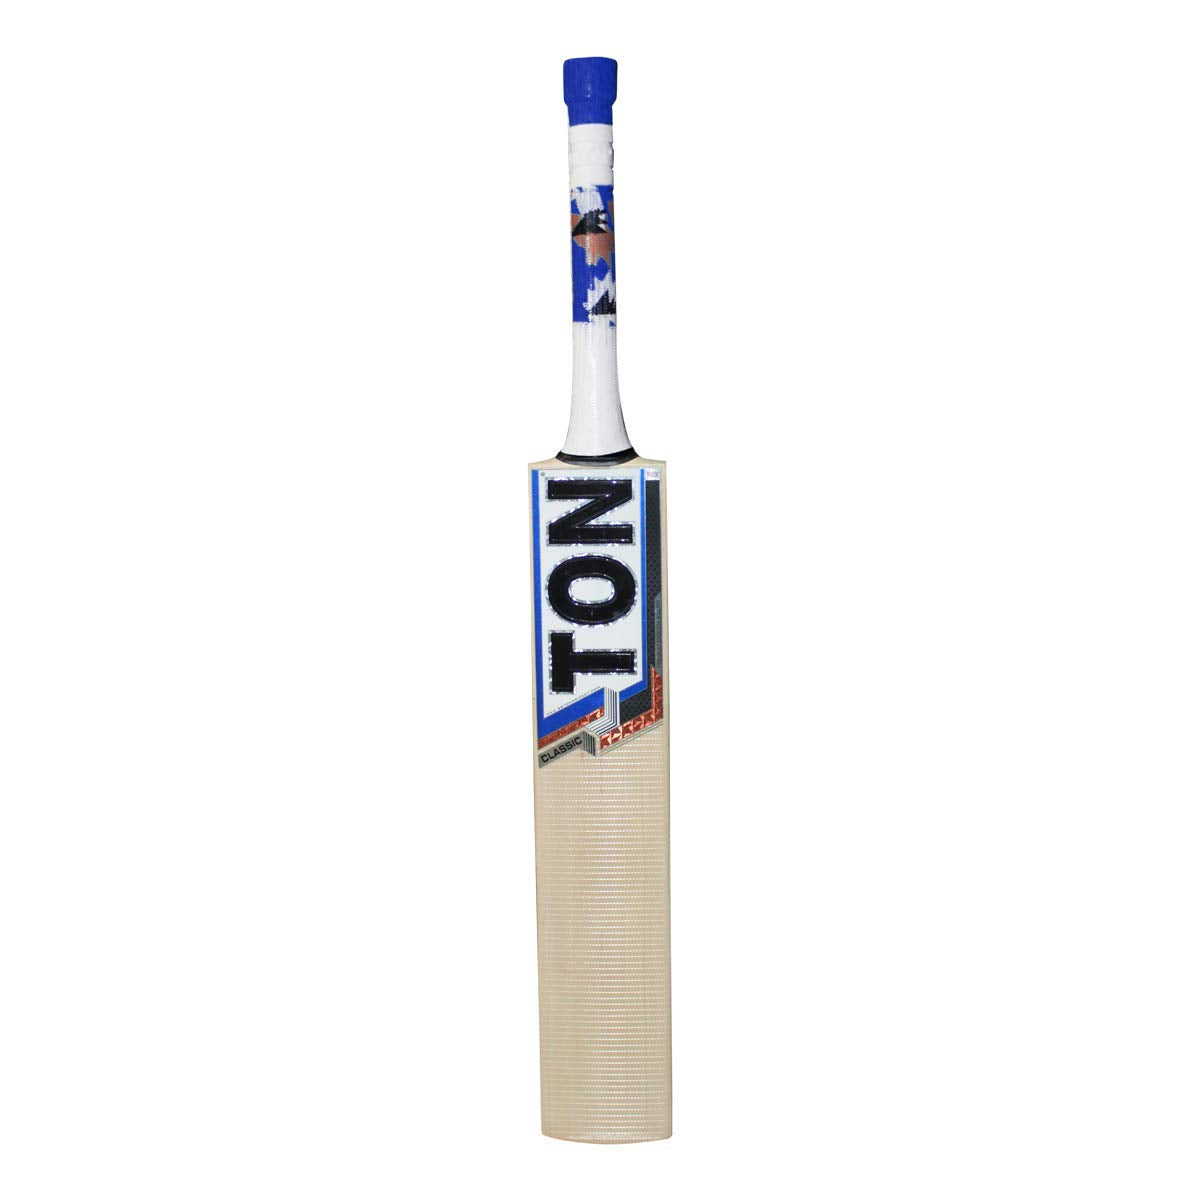 SS Ton Classic English Willow Cricket Bat - Best Price online Prokicksports.com